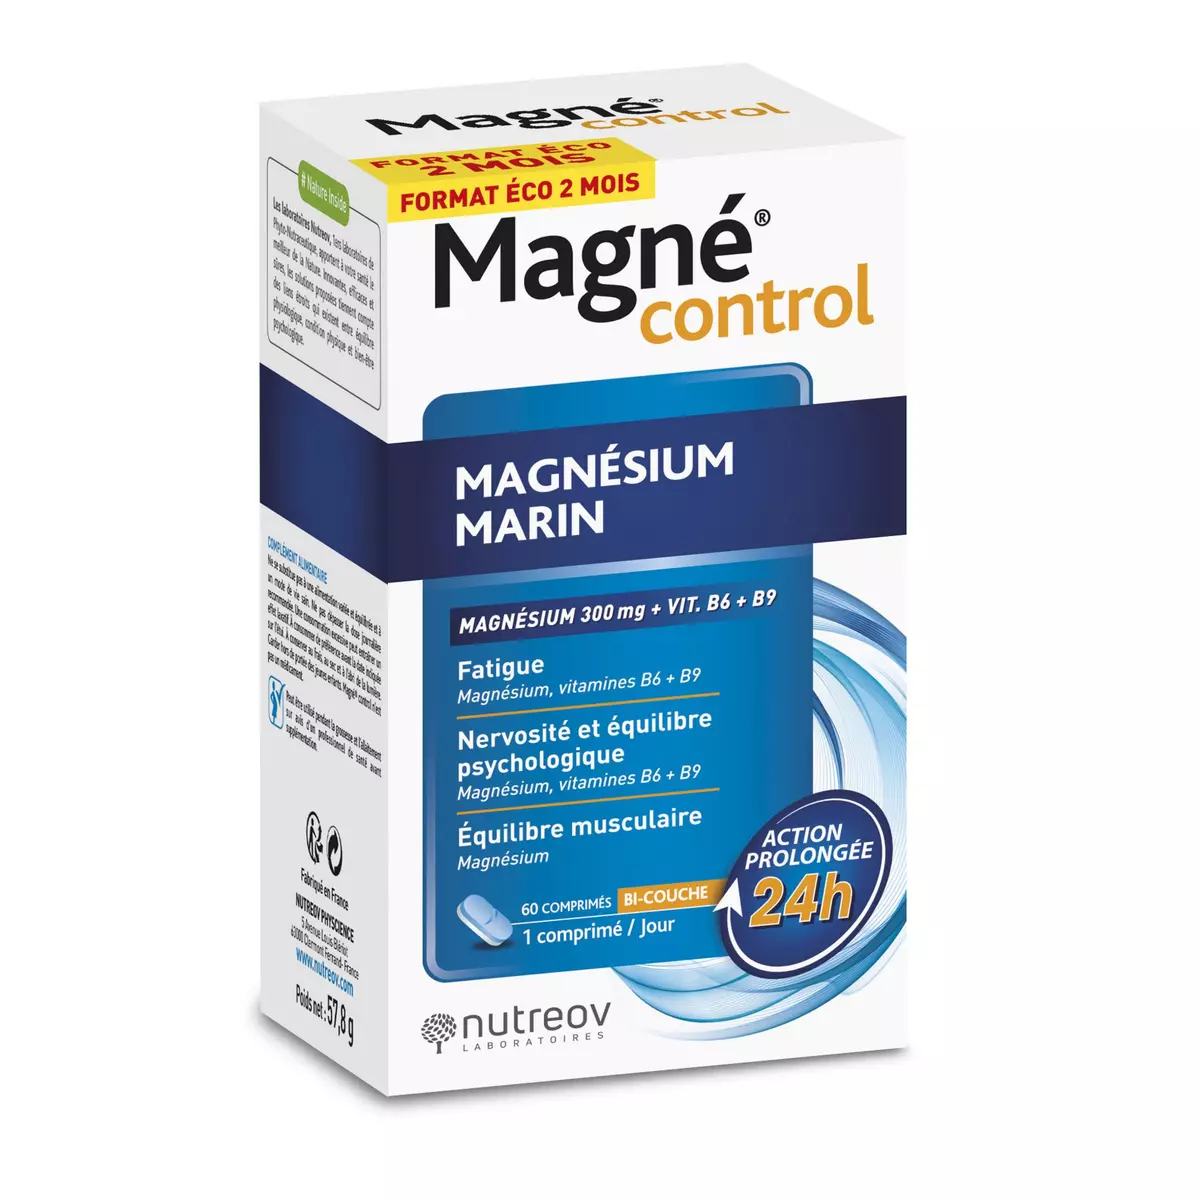 NUTREOV Magné control comprimés de magnésium marin format 2 mois 60 pièces